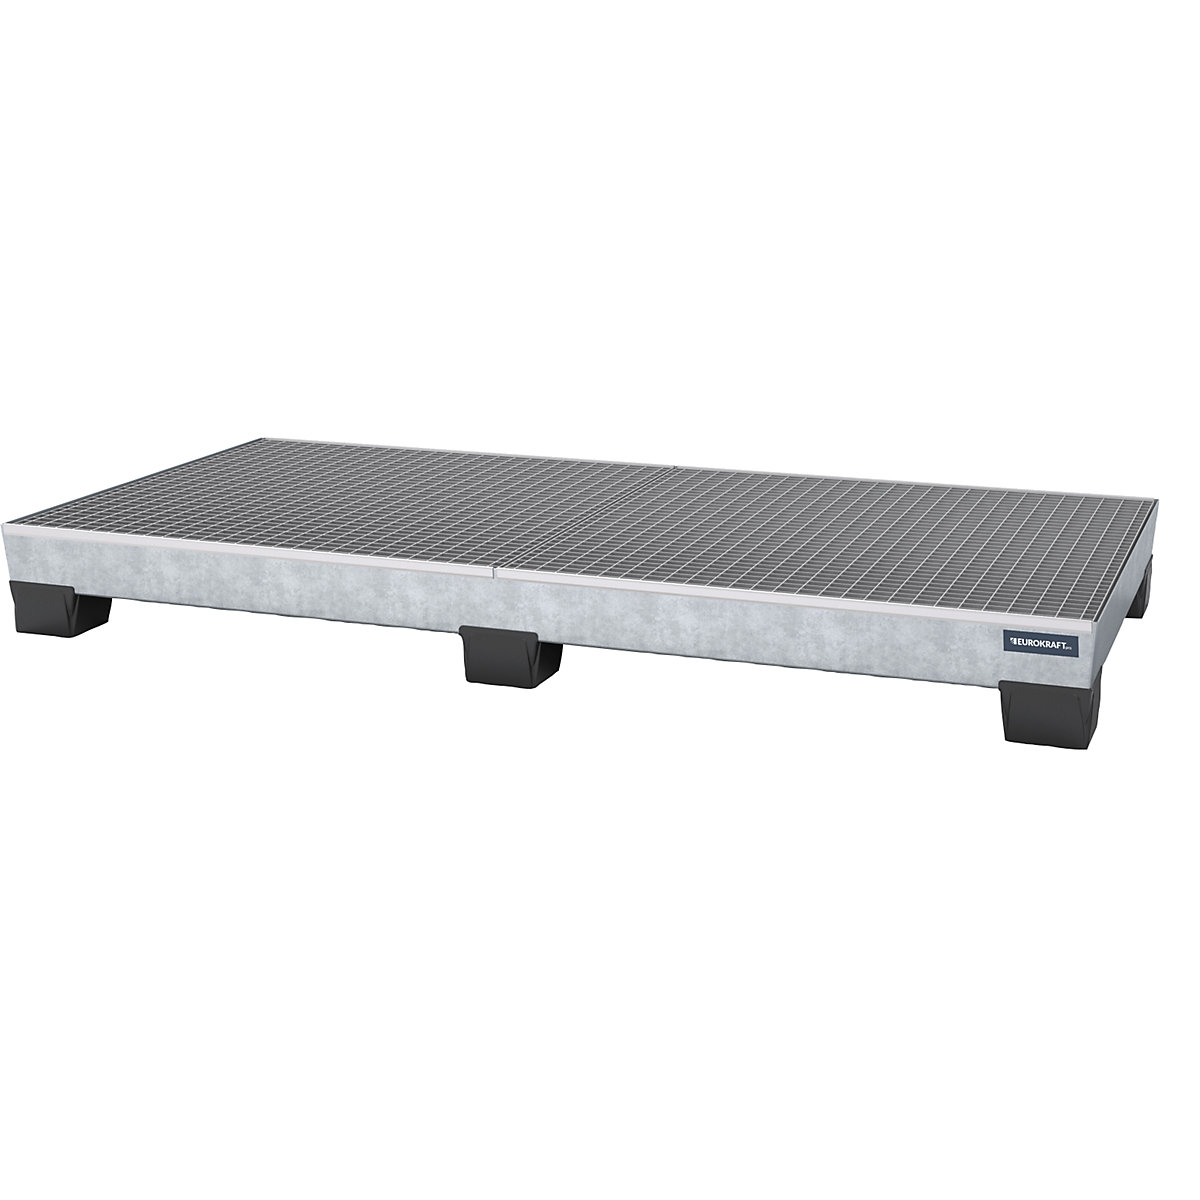 Steel sump tray with plastic feet – eurokraft pro